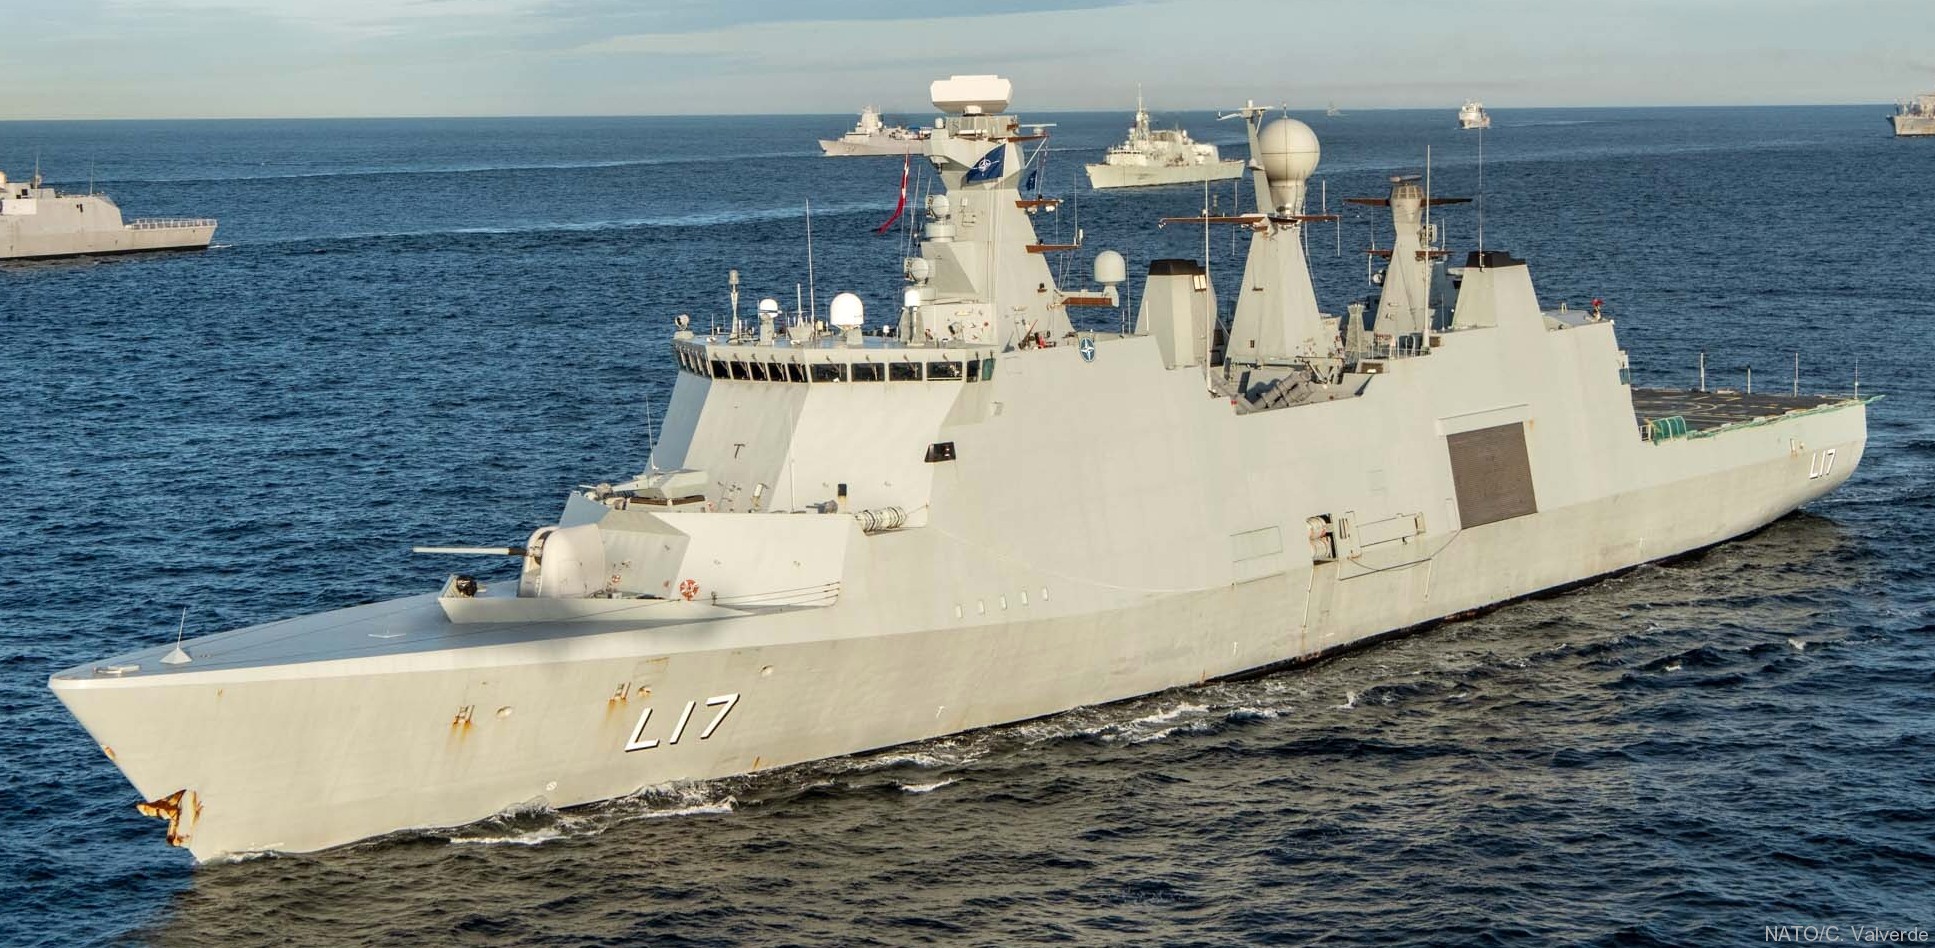 f-342 hdms esbern snare l-17 frigate command support ship royal danish navy 85